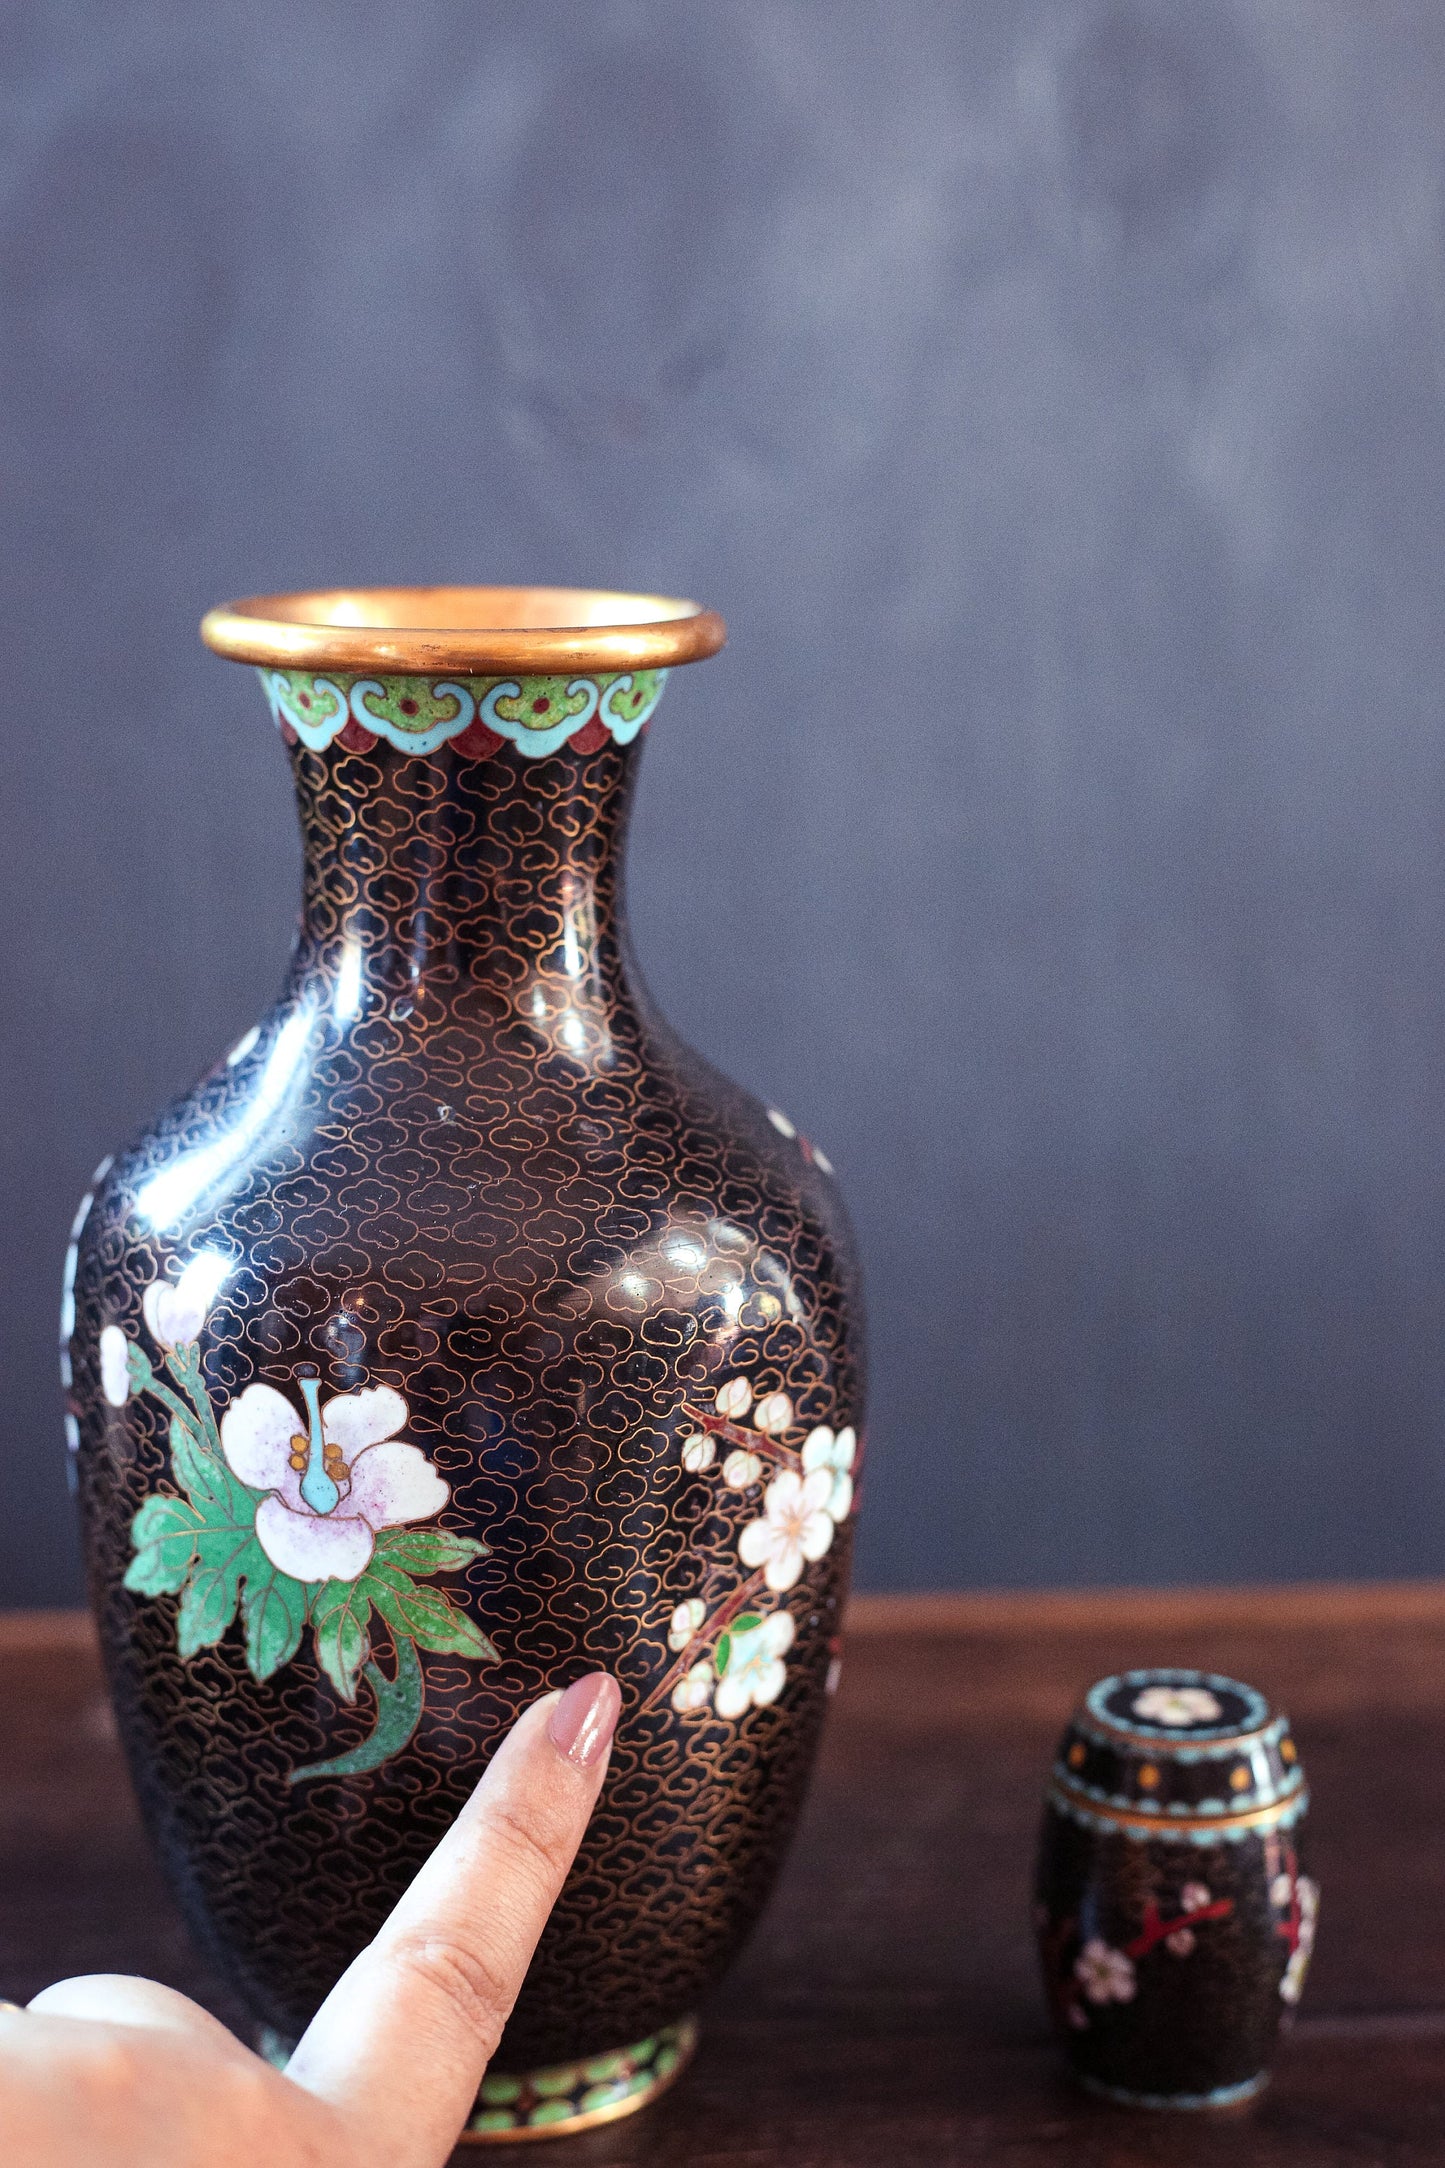 Cloisonné Vase and Match Holder - Vintage Colorful Floral Chinese Cloisonné